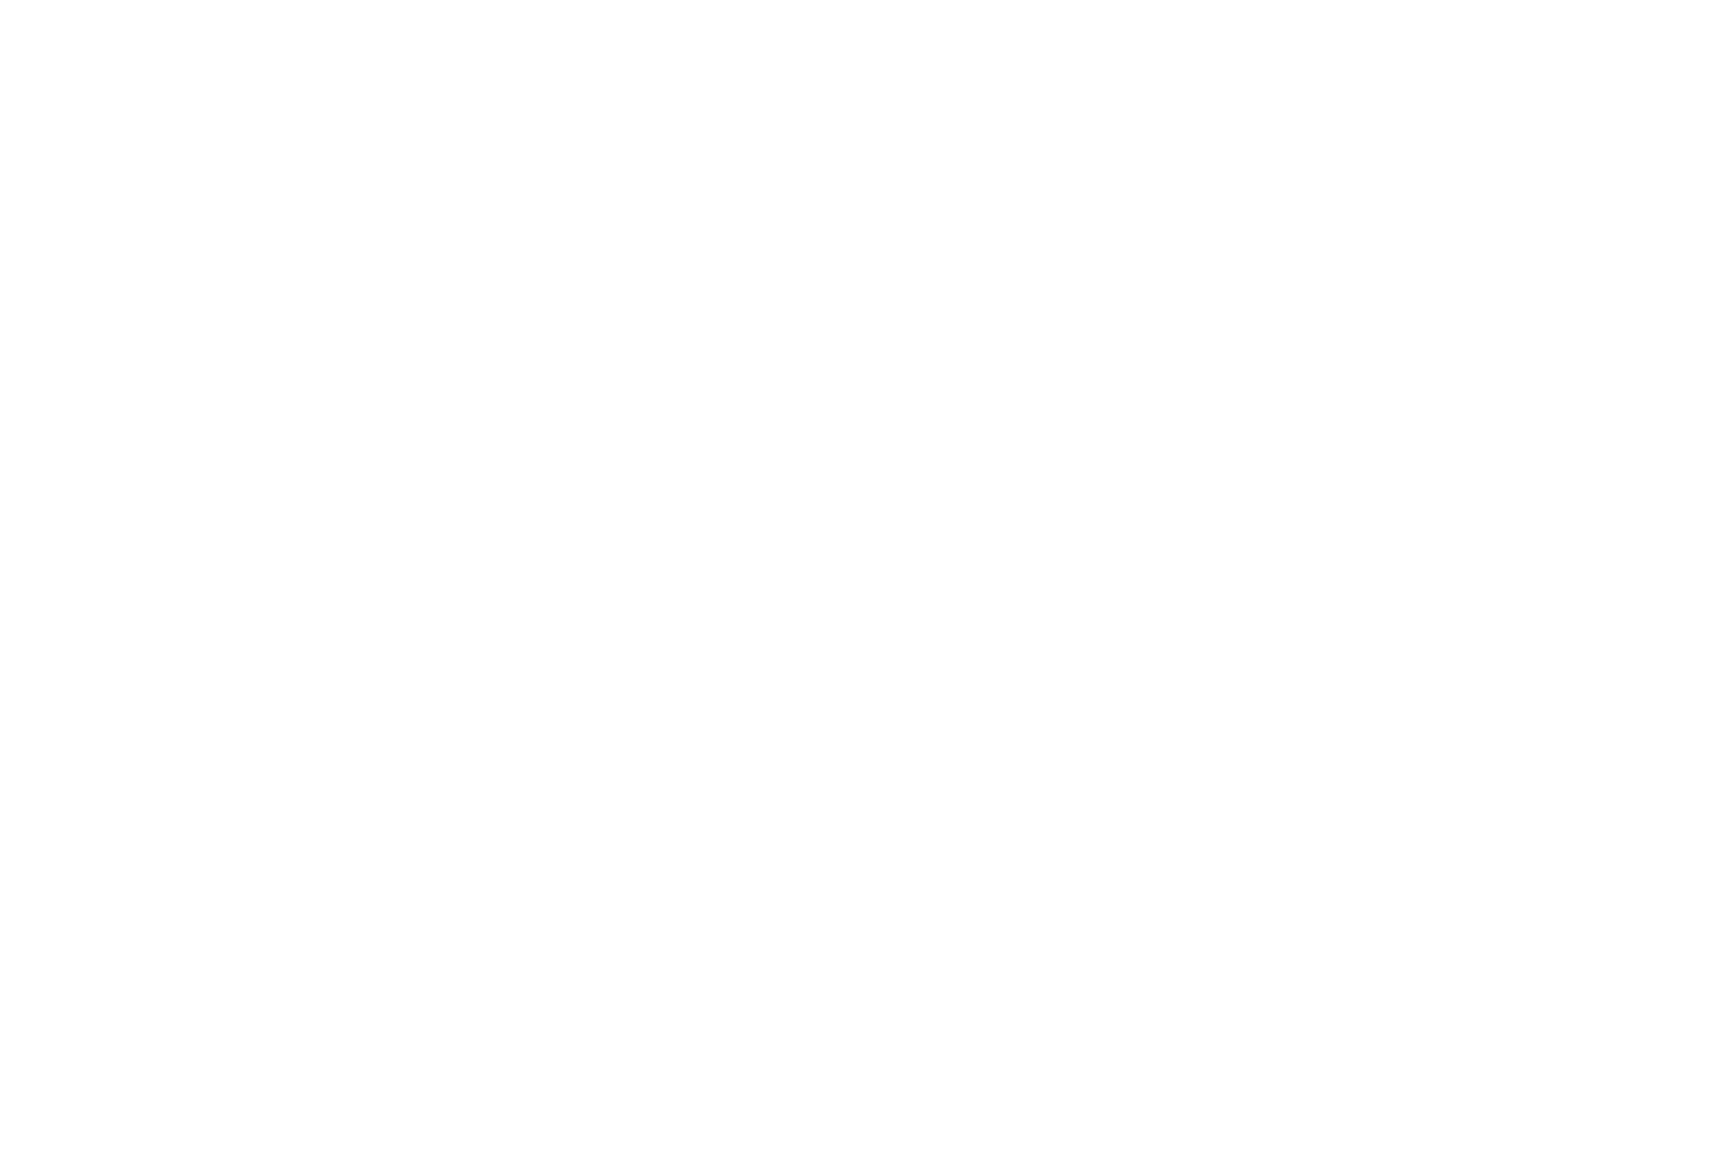 Best Short Film - Mannheim Arts and Film Festival - Winner 2023